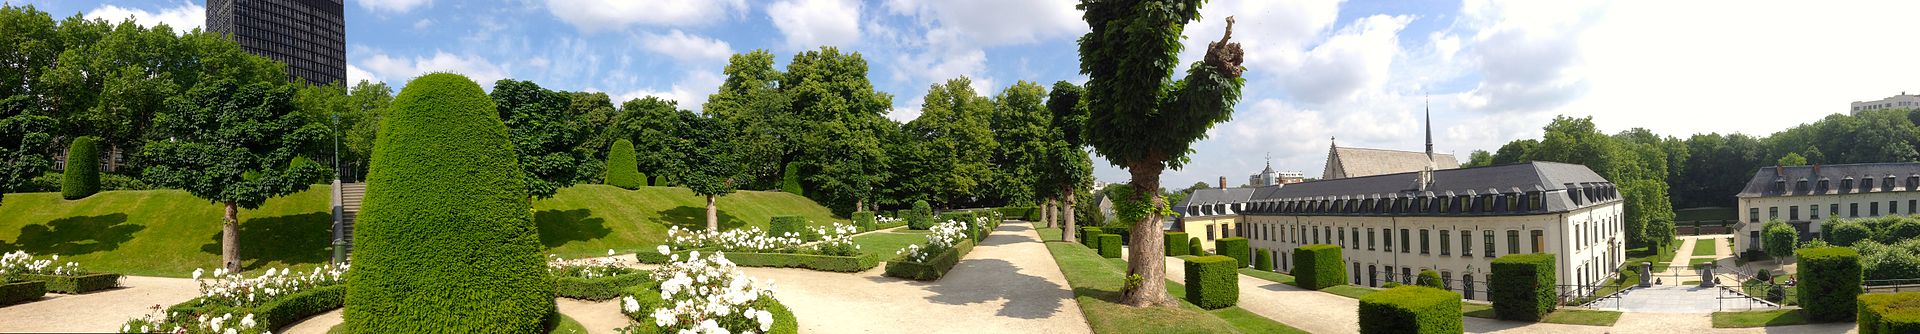 La Cambre Abbey gardens